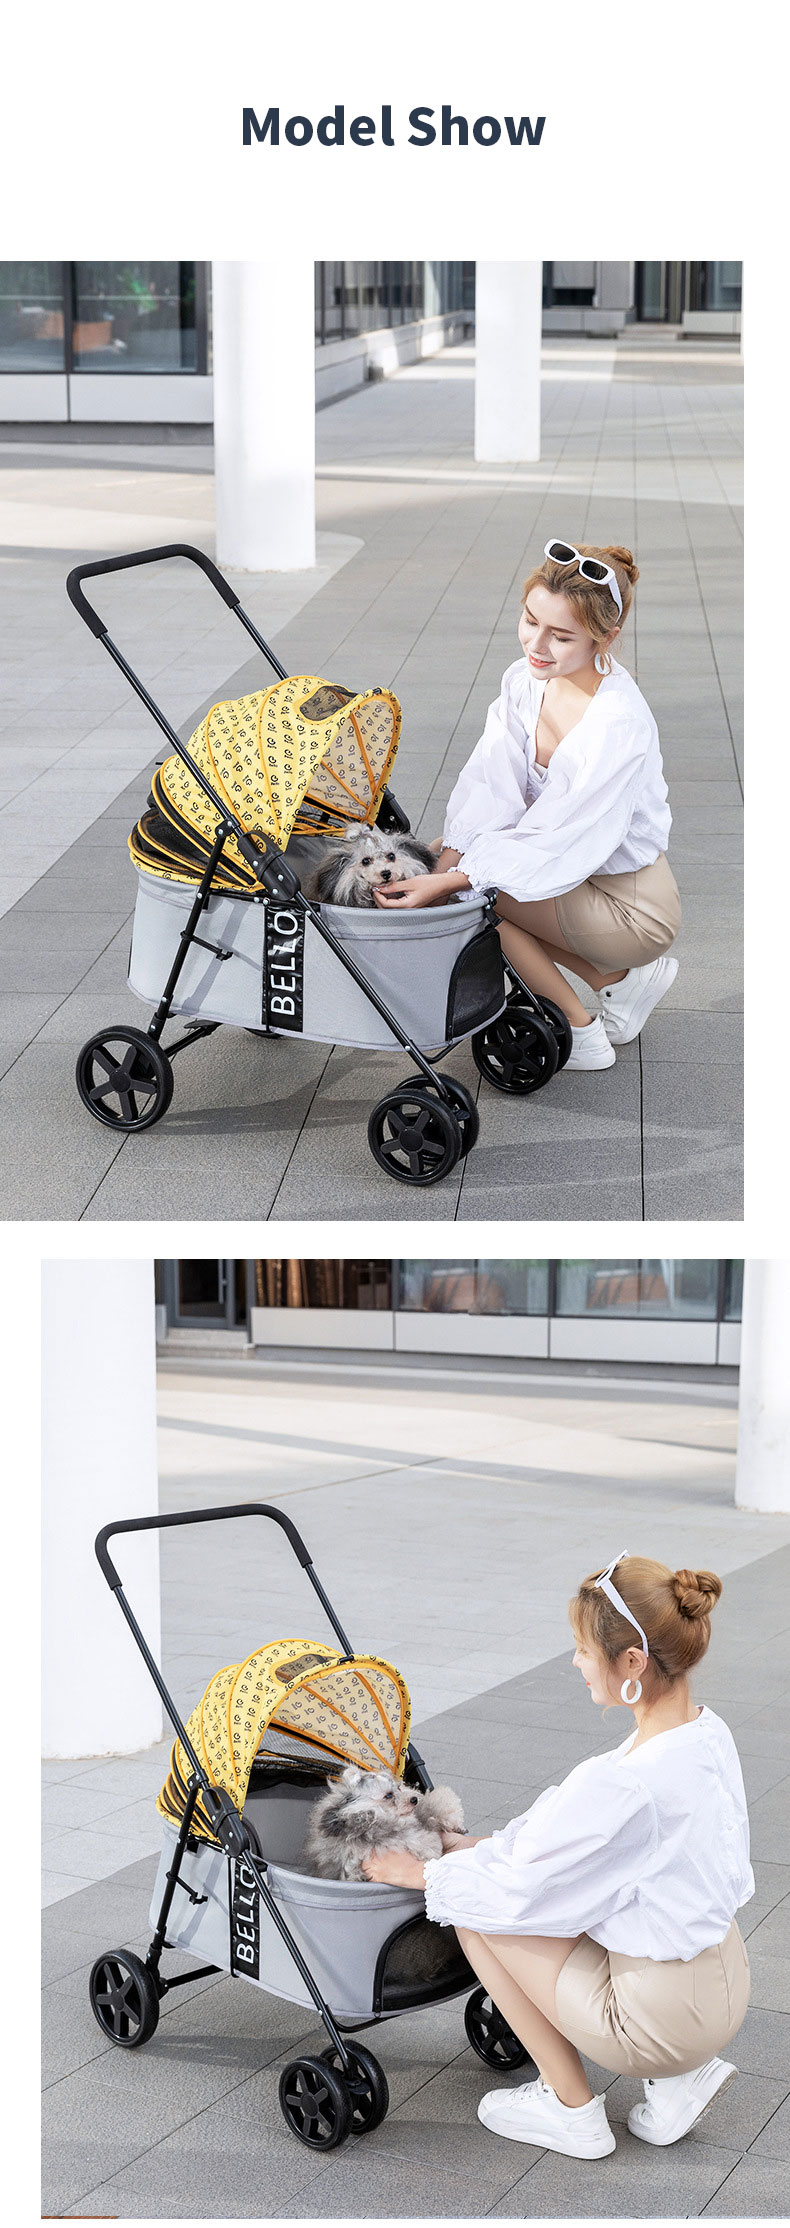 pet dog stroller1 (3).jpg